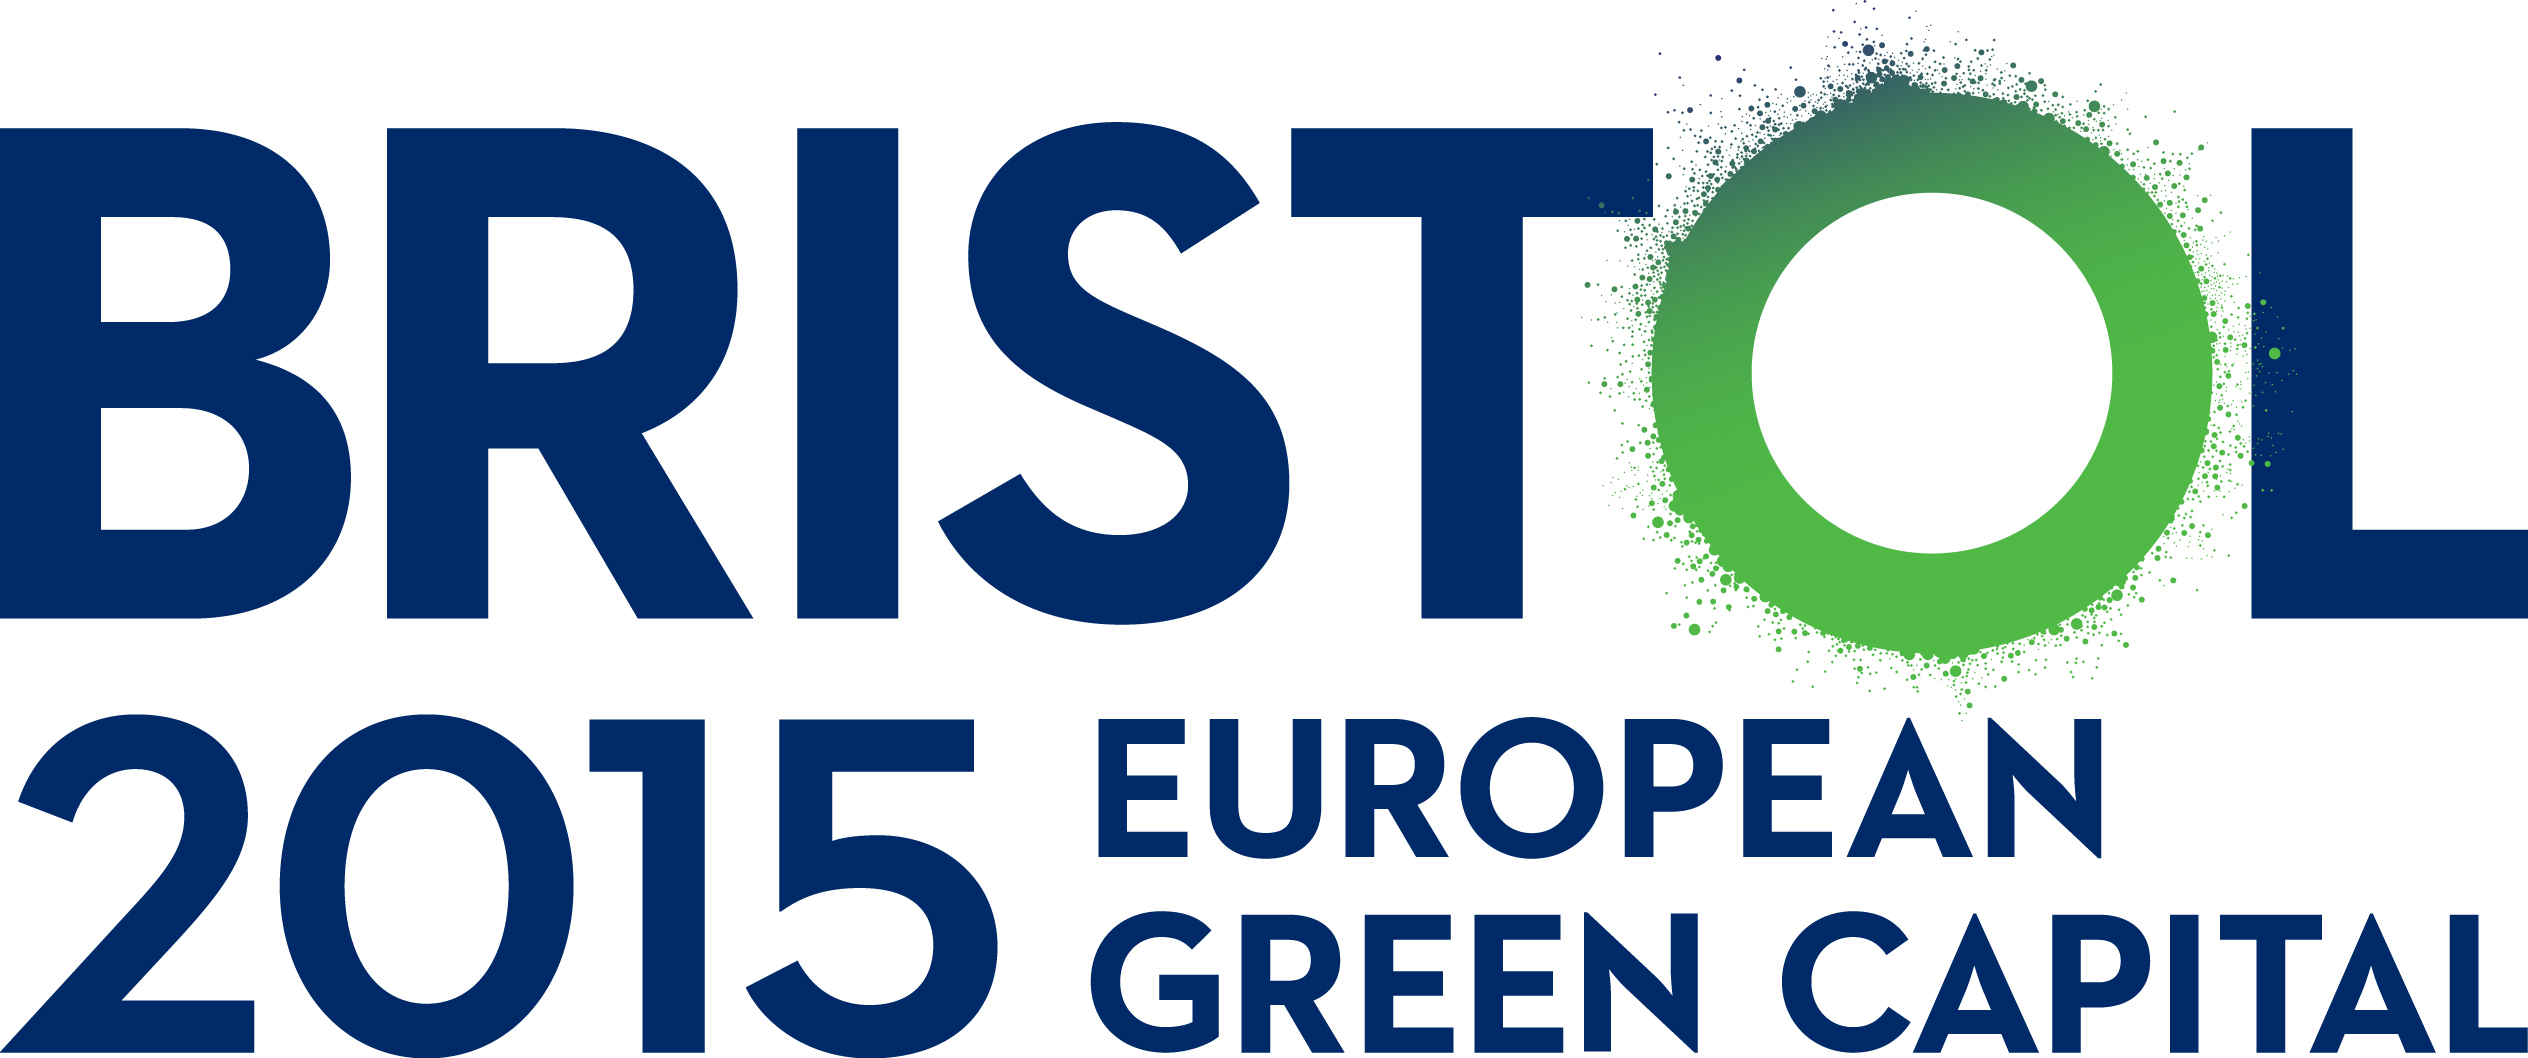 Bristol European Green Capital 2015